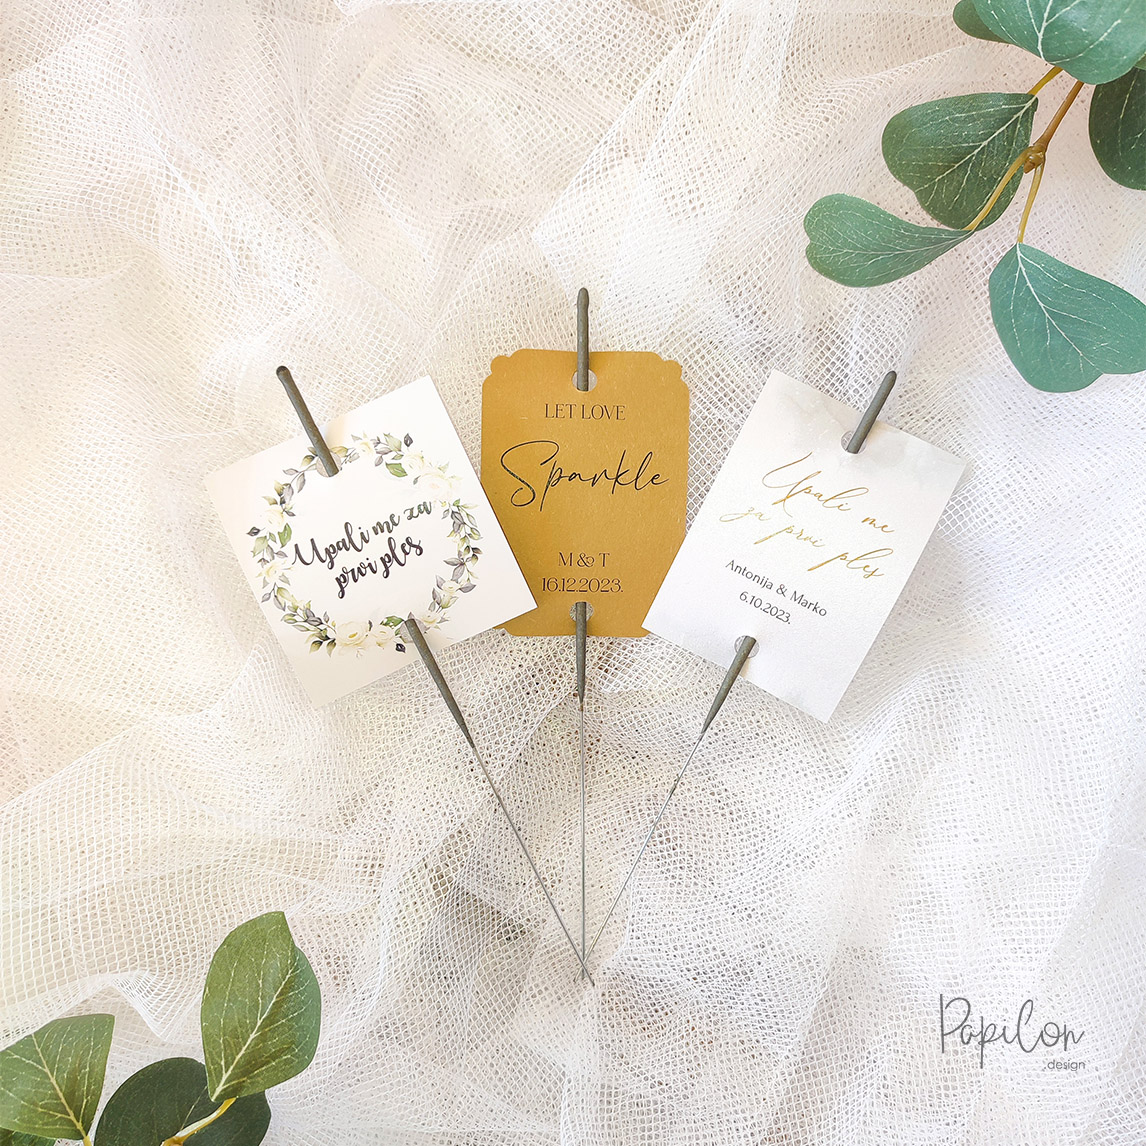 papilon design zagreb privjesnice perla etikete za vjenčanje zahvalnice prskalice